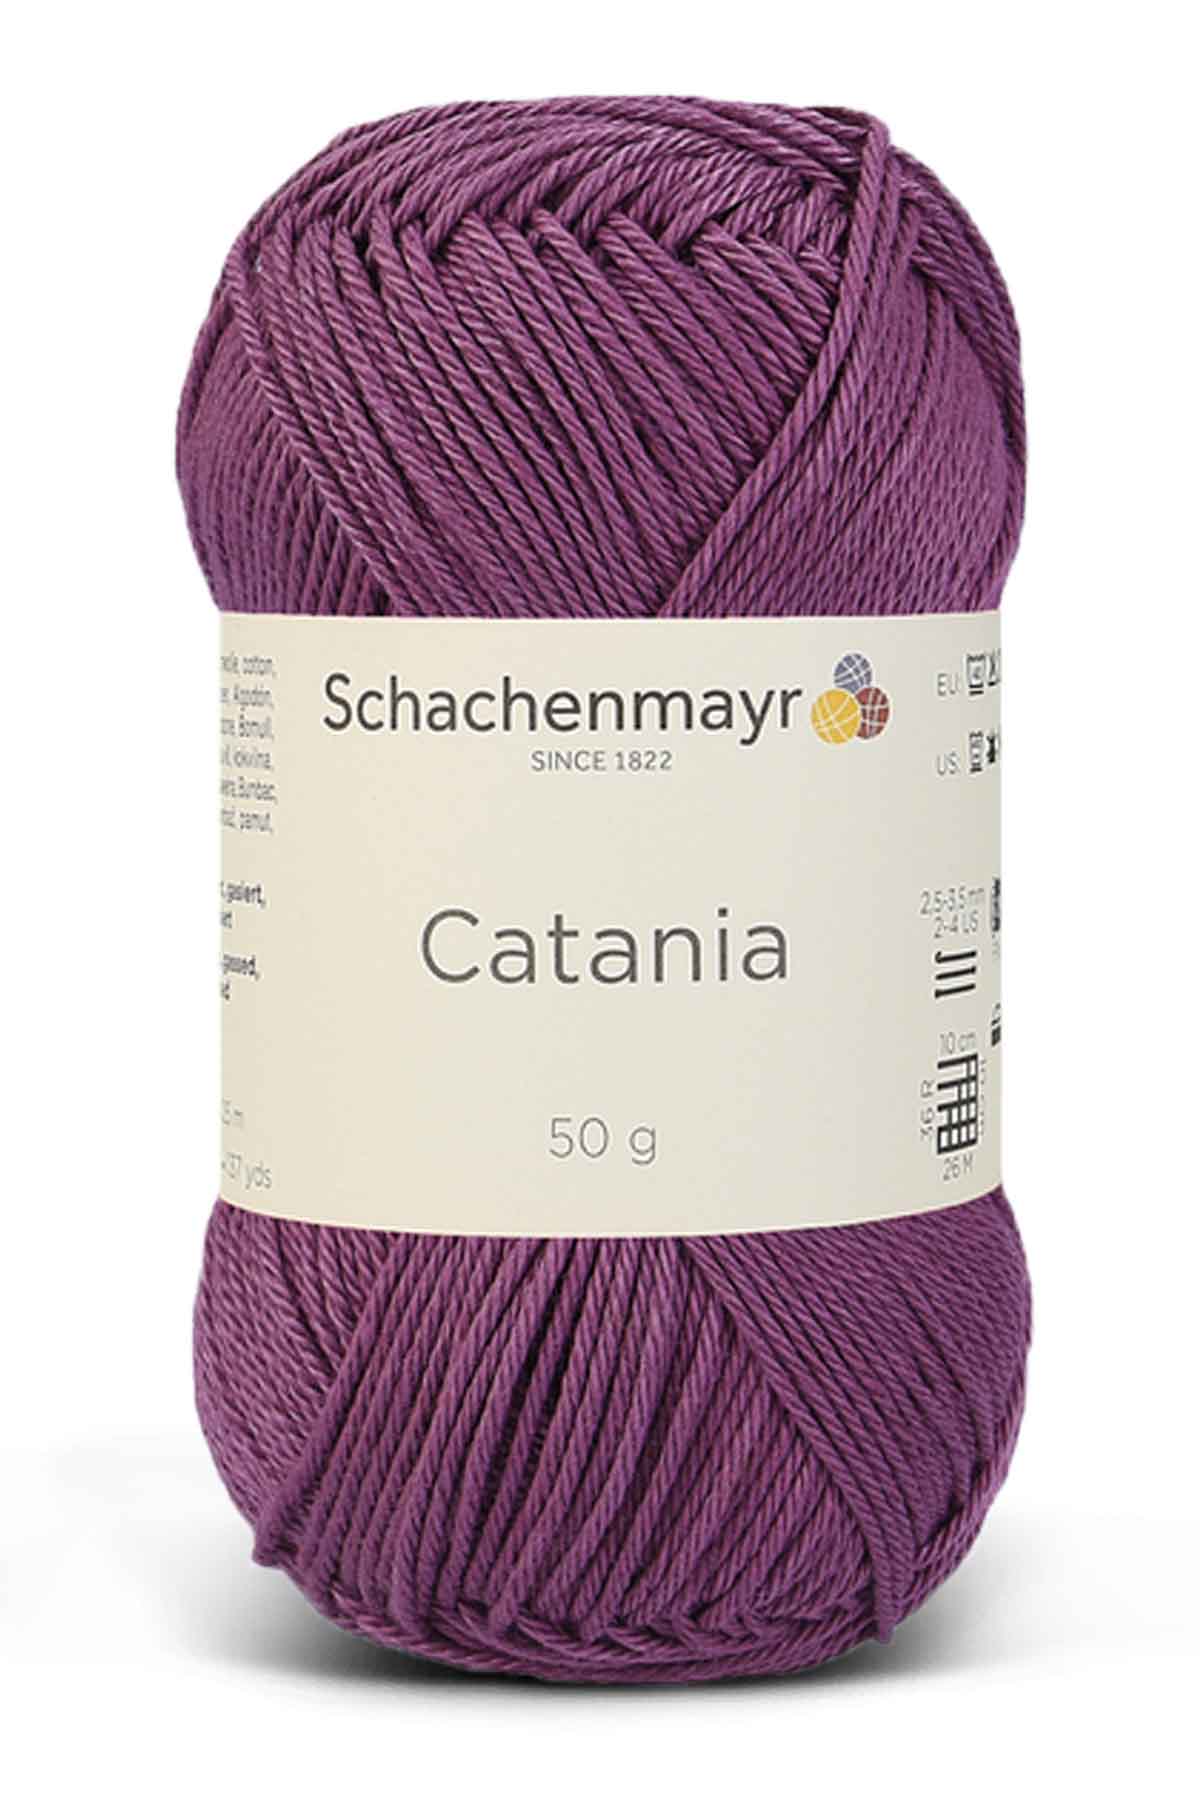 Schachenmayr Catania Cotton Yarn